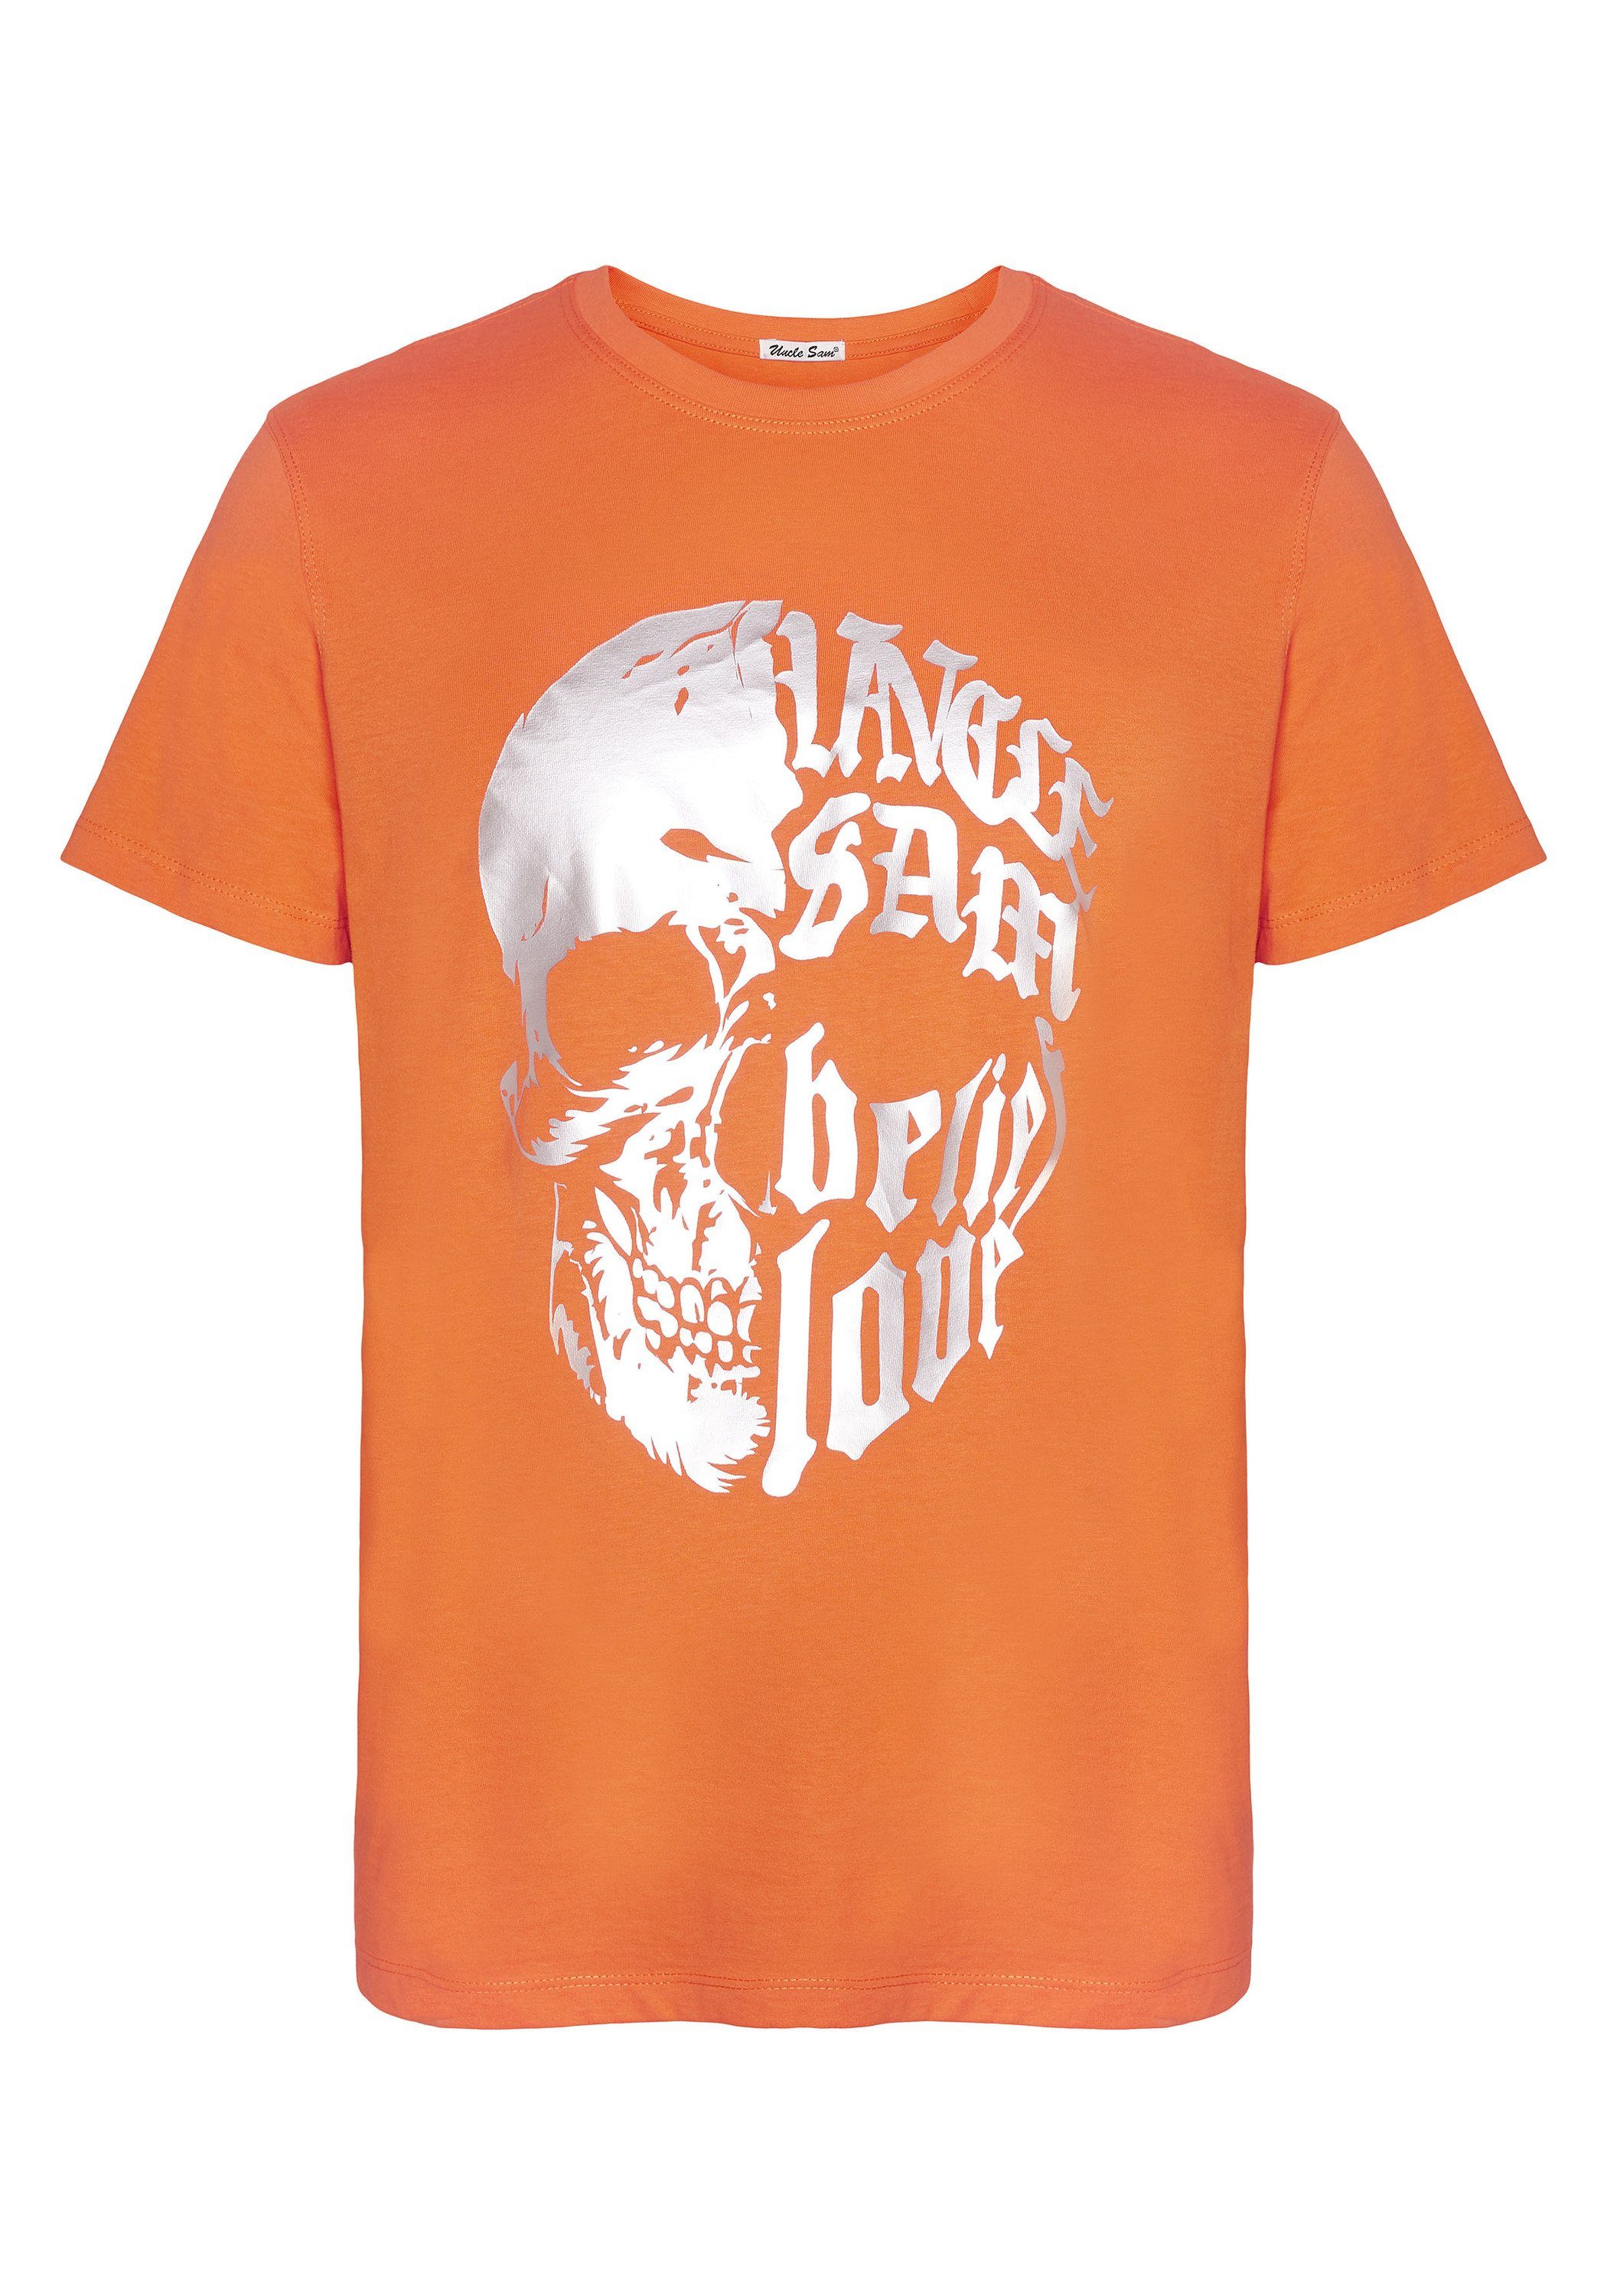 Uncle Sam Print-Shirt aus Vermillon 16-1362 Orange Baumwolle